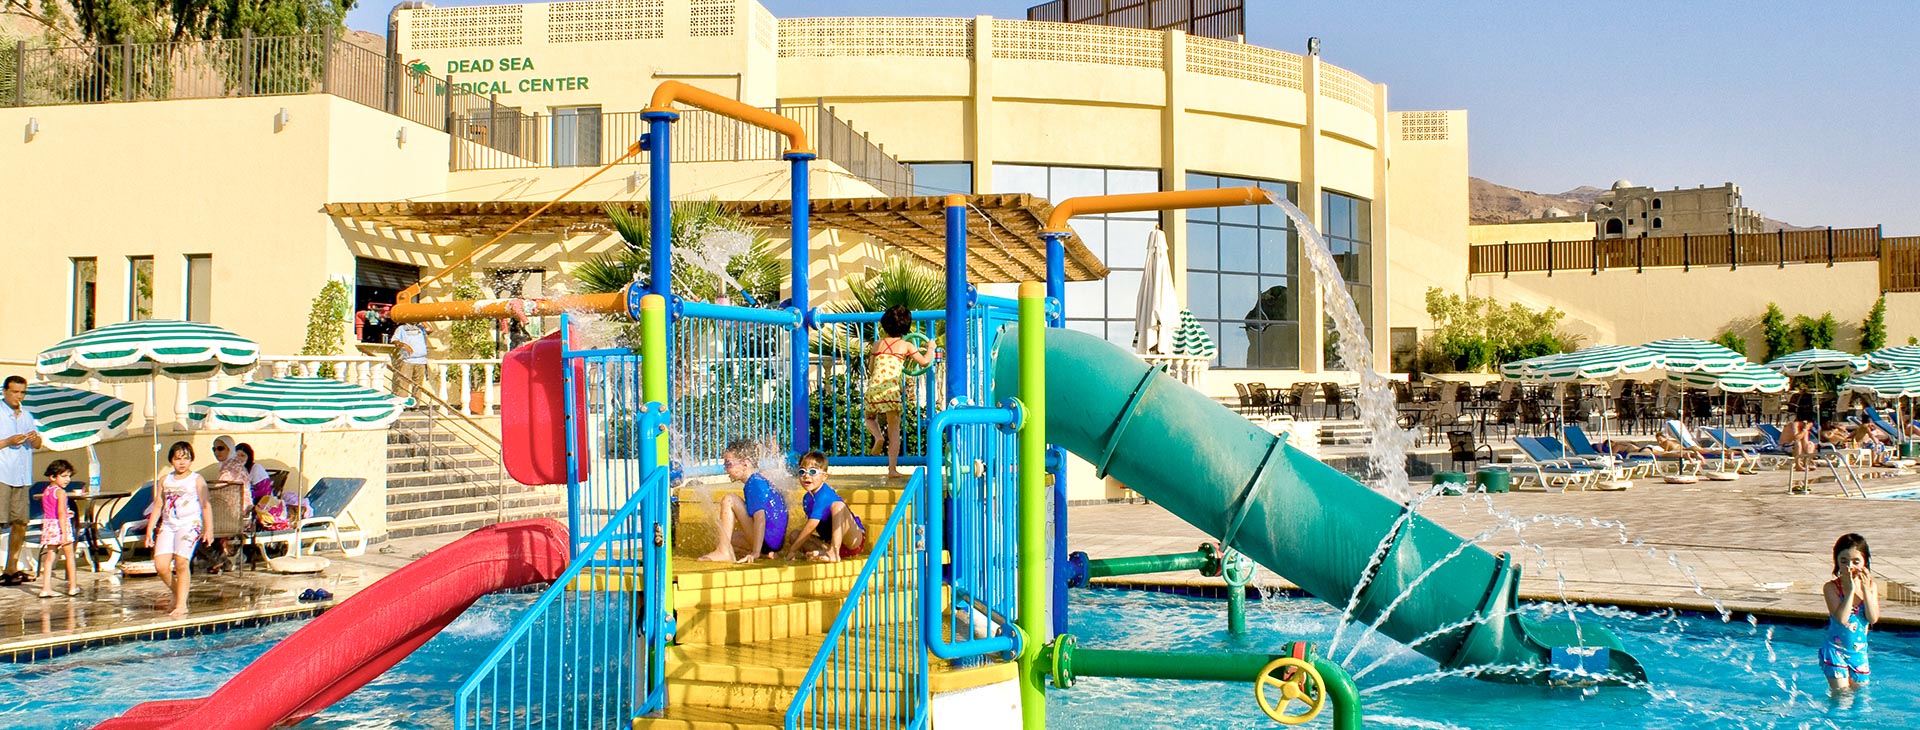 Dead Sea Spa Hotel Obrázek5